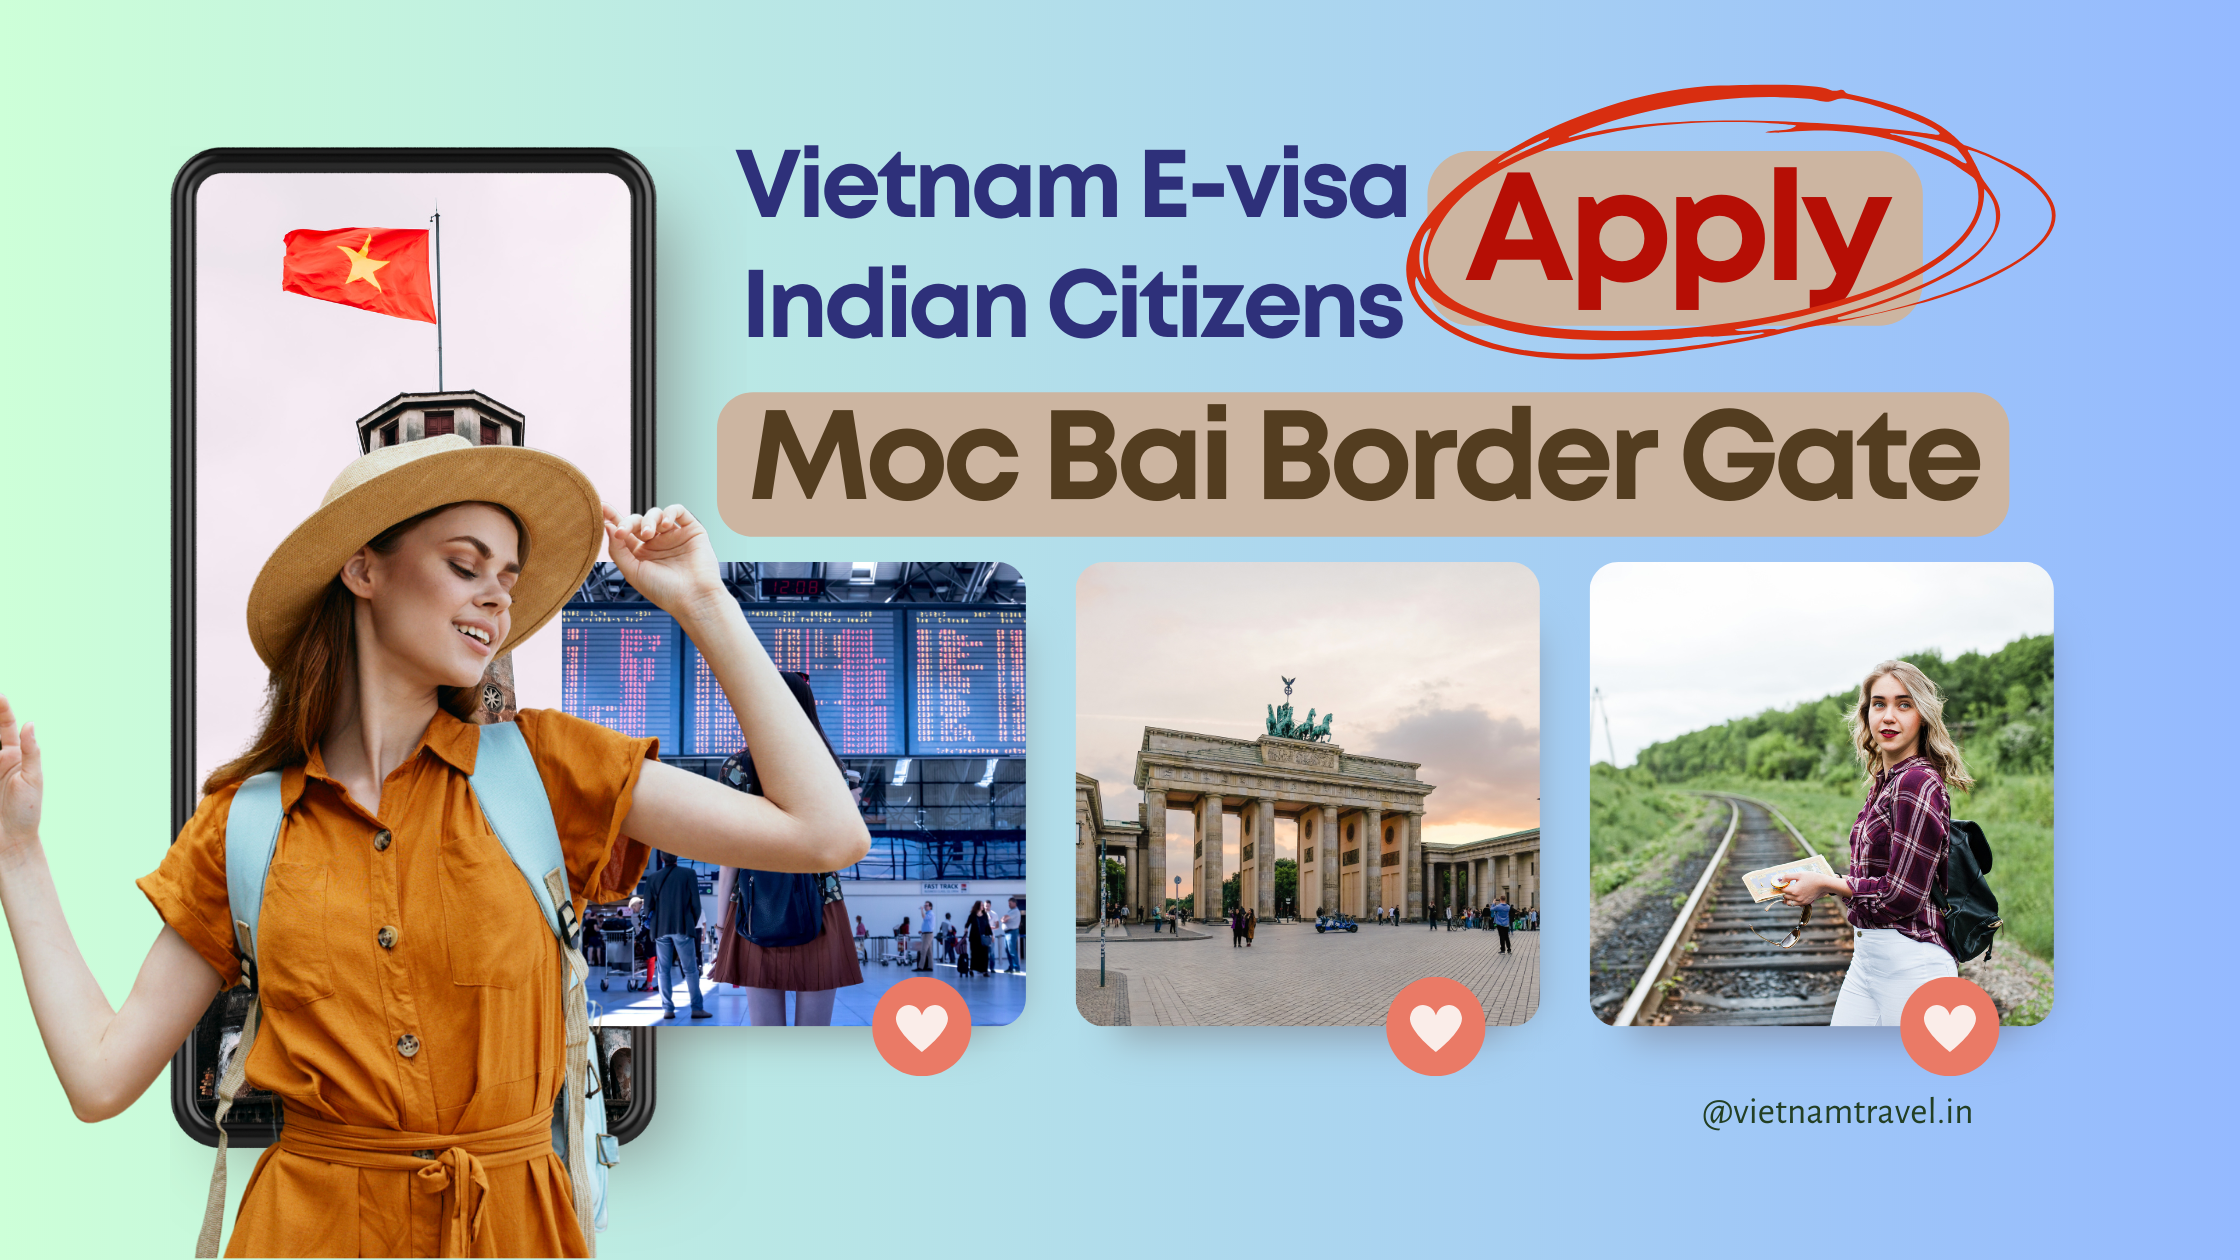 applying-for-Vietnam E-visa-at-Moc-Bai-Border-Gate